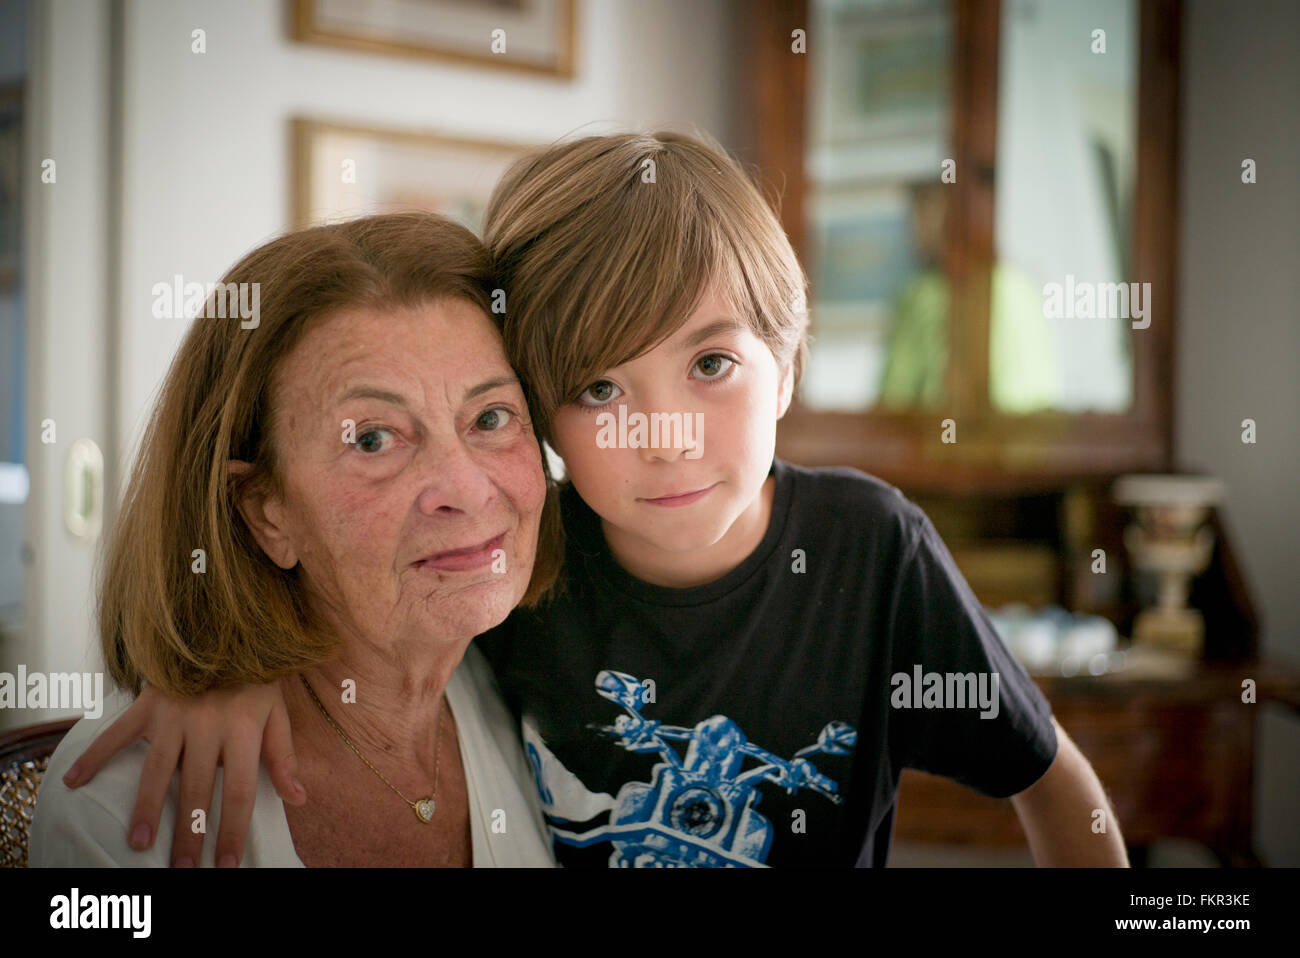 Caucasian grandmother and grandson hugging Stock Photo